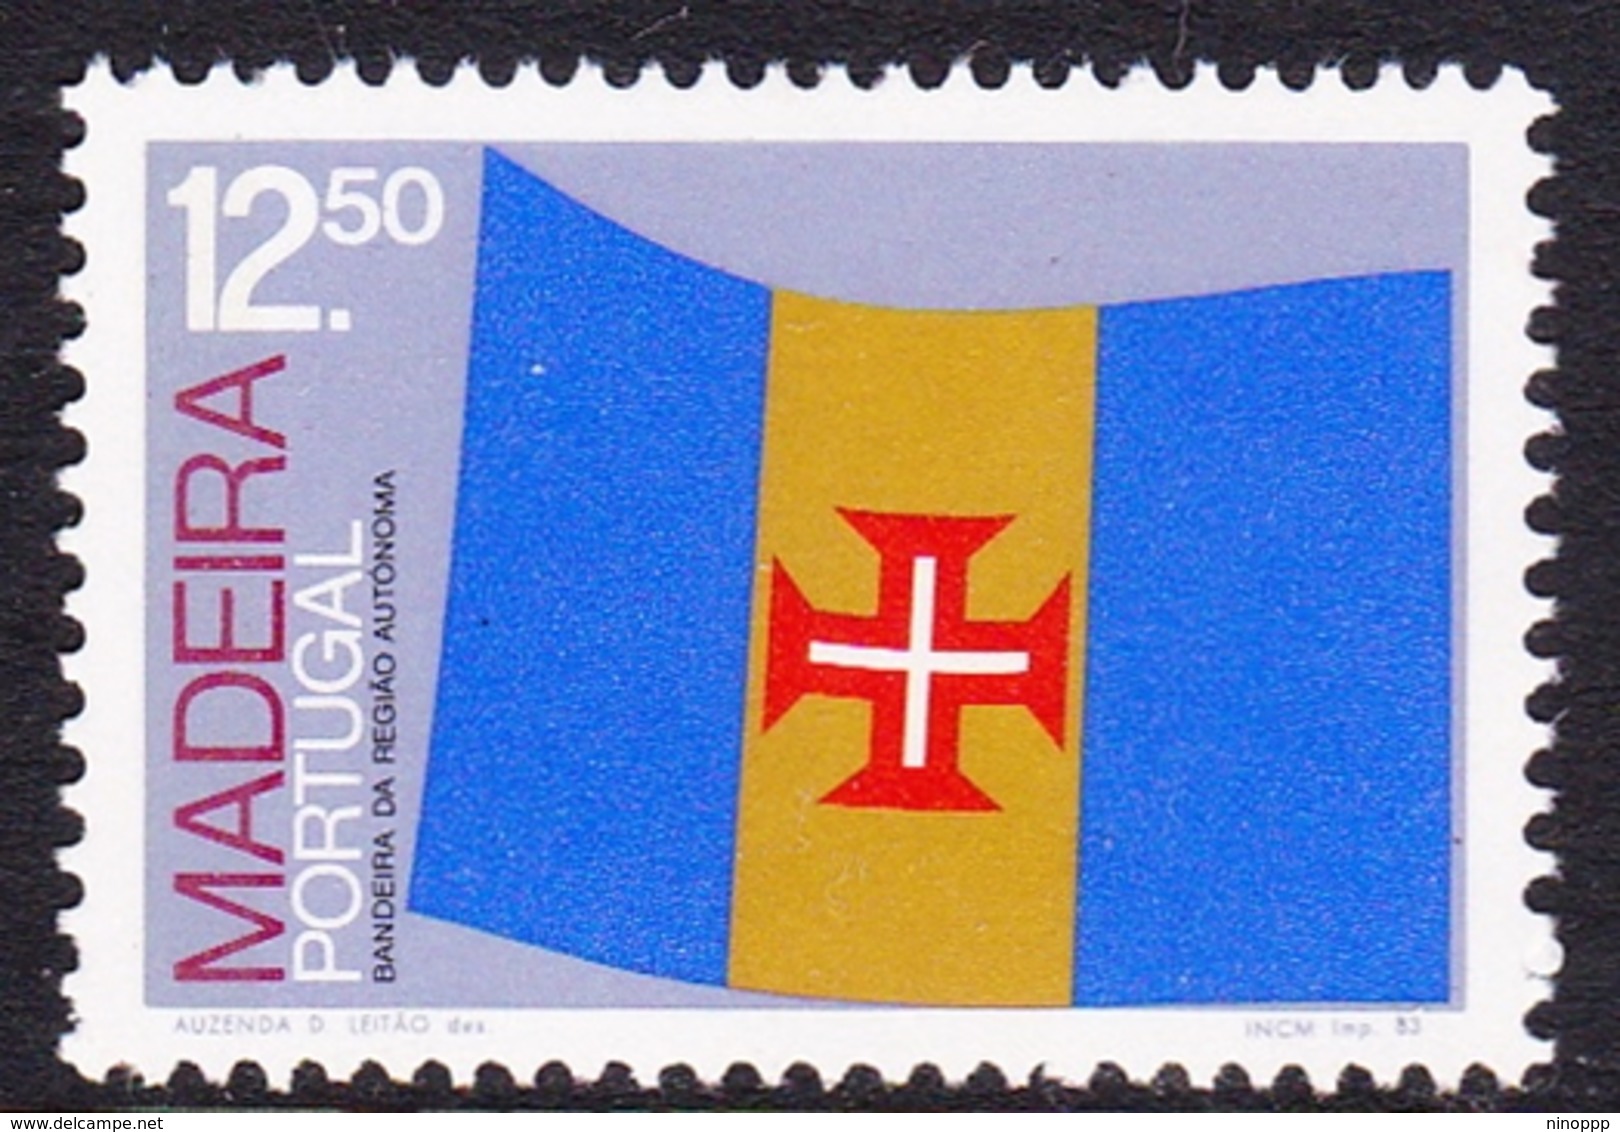 Portugal -Madeira Scott 89-1983 Flad, Mint Never Hinged - Madeira